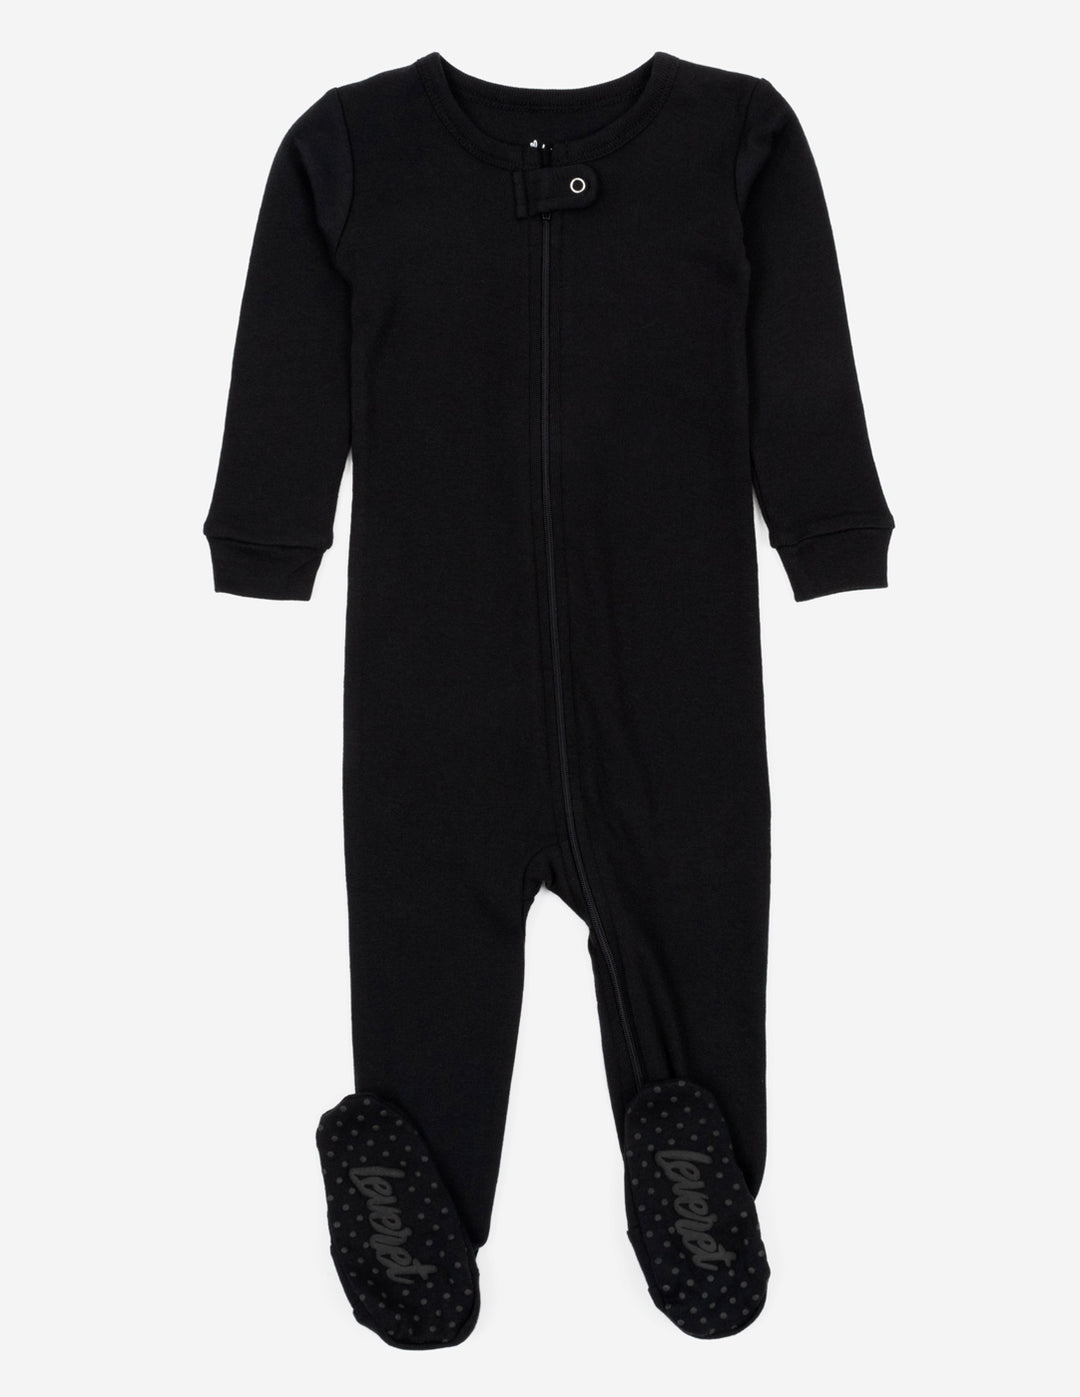 black baby footed pajama